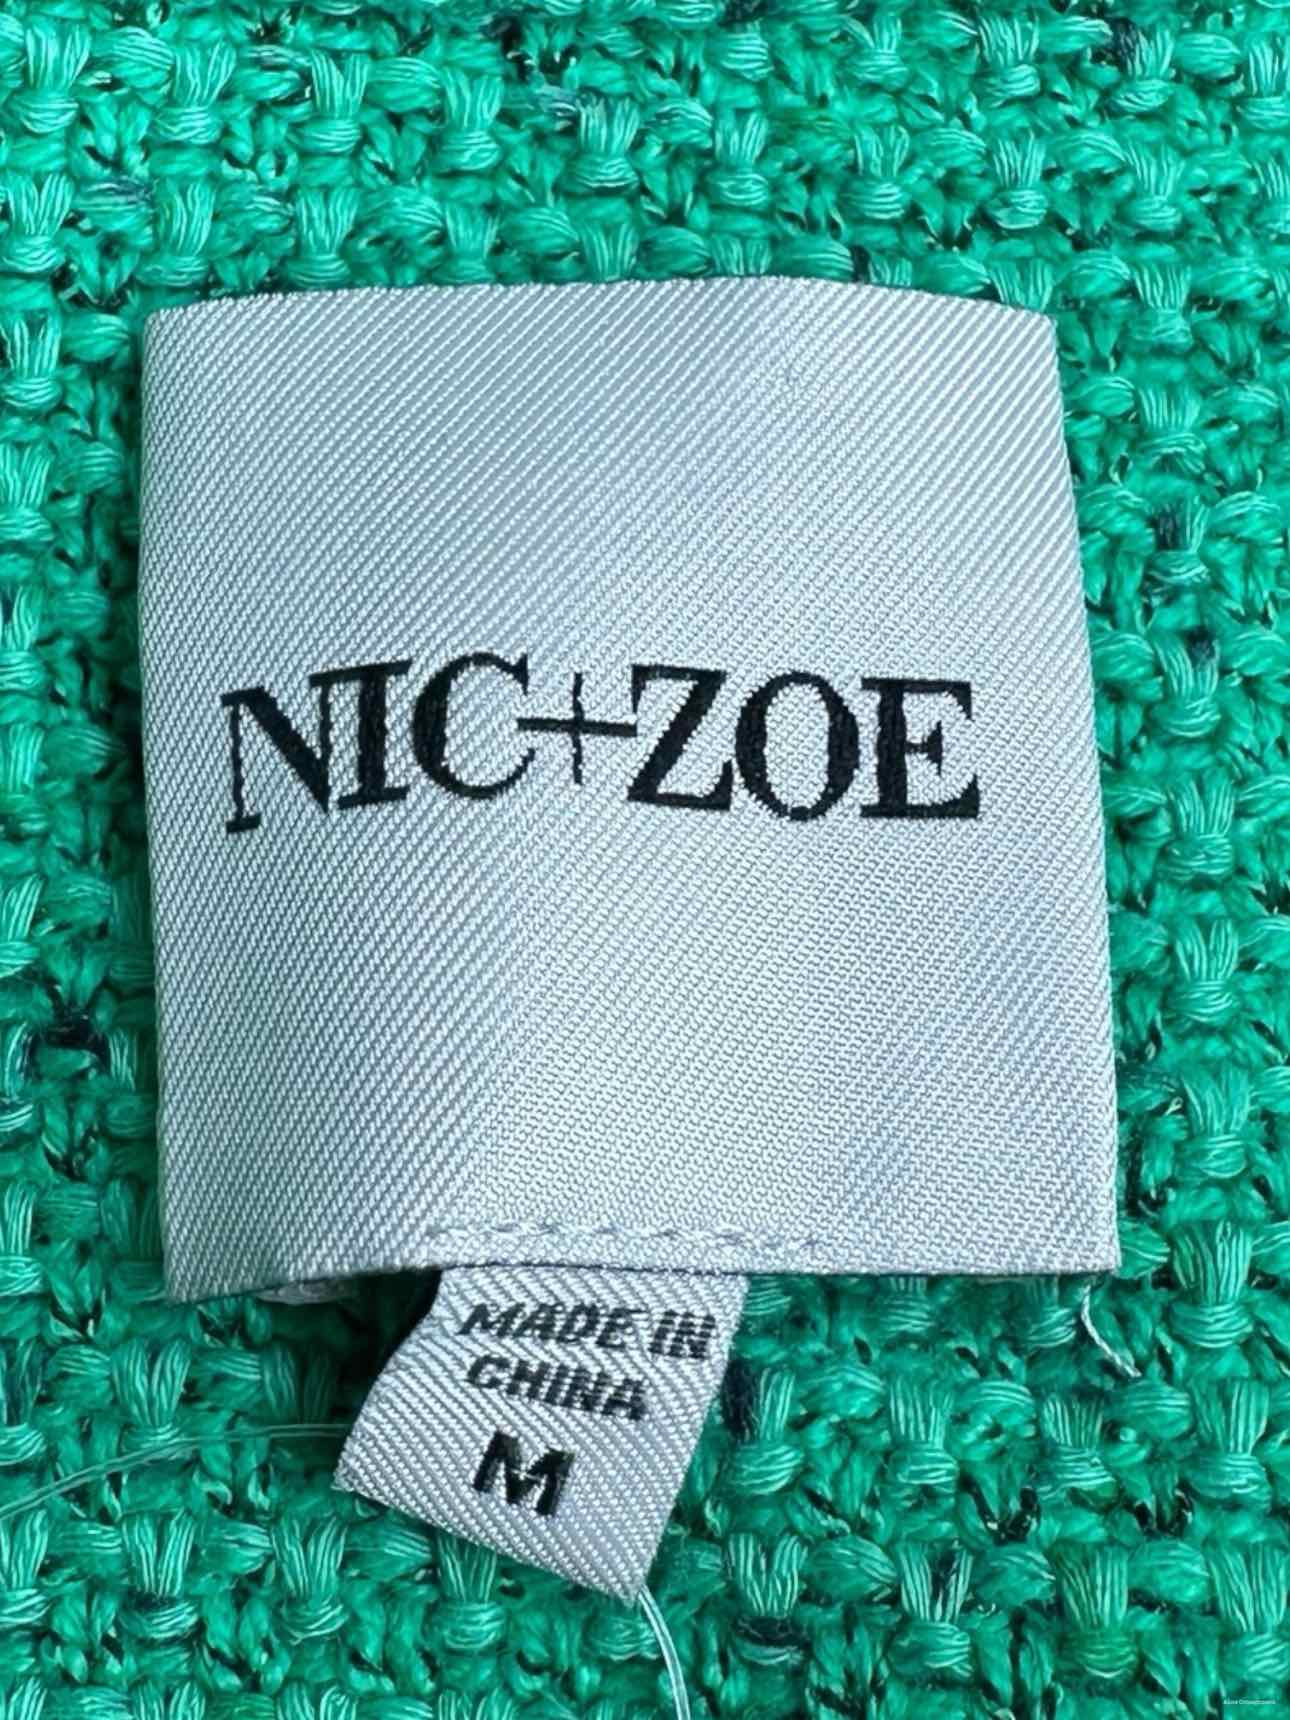 NIC & ZOE Green Tweed Jacket Size M